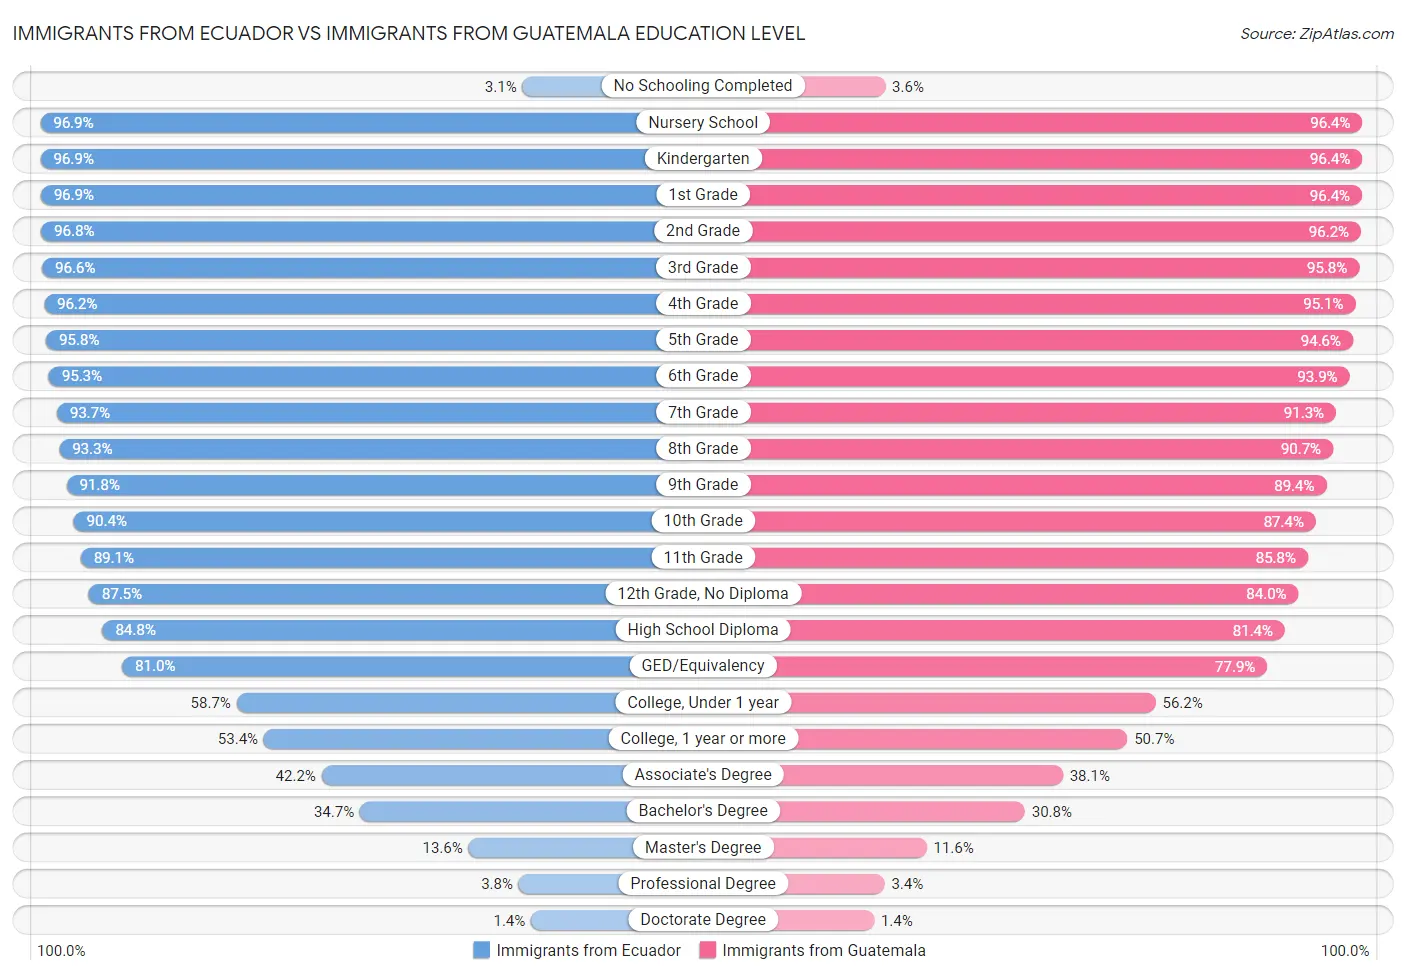 Immigrants from Ecuador vs Immigrants from Guatemala Education Level